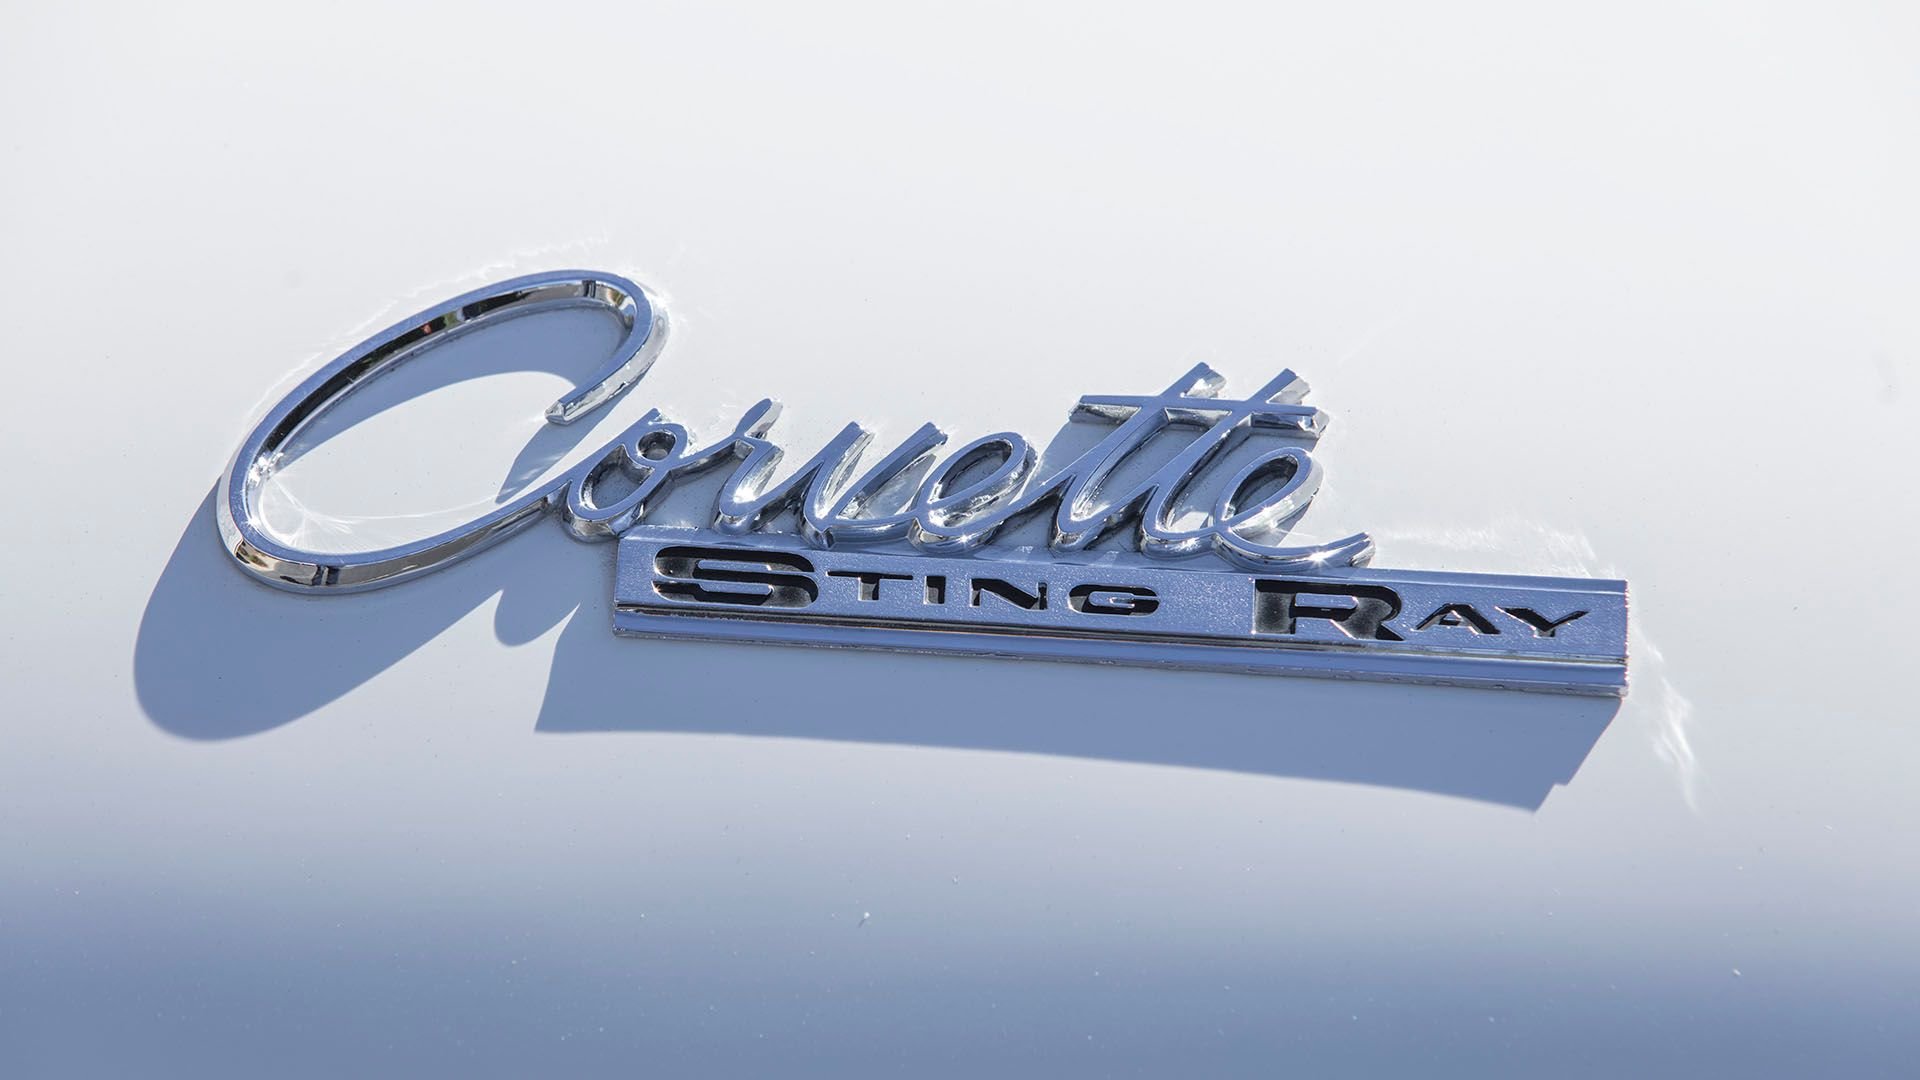 For Sale 1963 Chevrolet Corvette "Split Window" Coupe 327/340